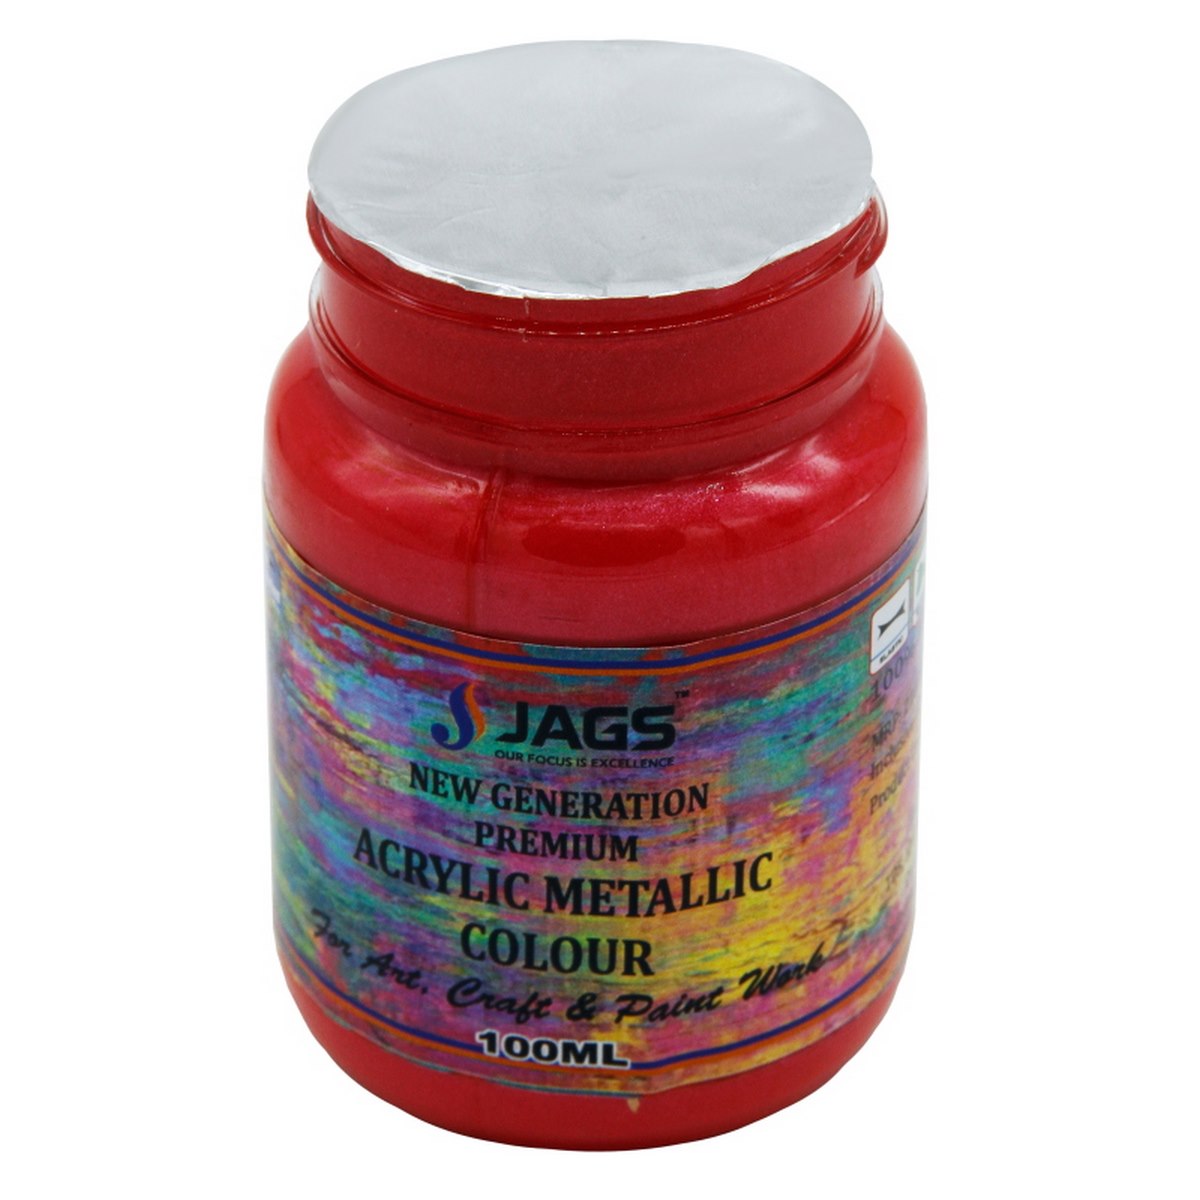 jags-mumbai Acrylic & Glass Colours Acrylic Metallic Col.Red 509 AMCRD100